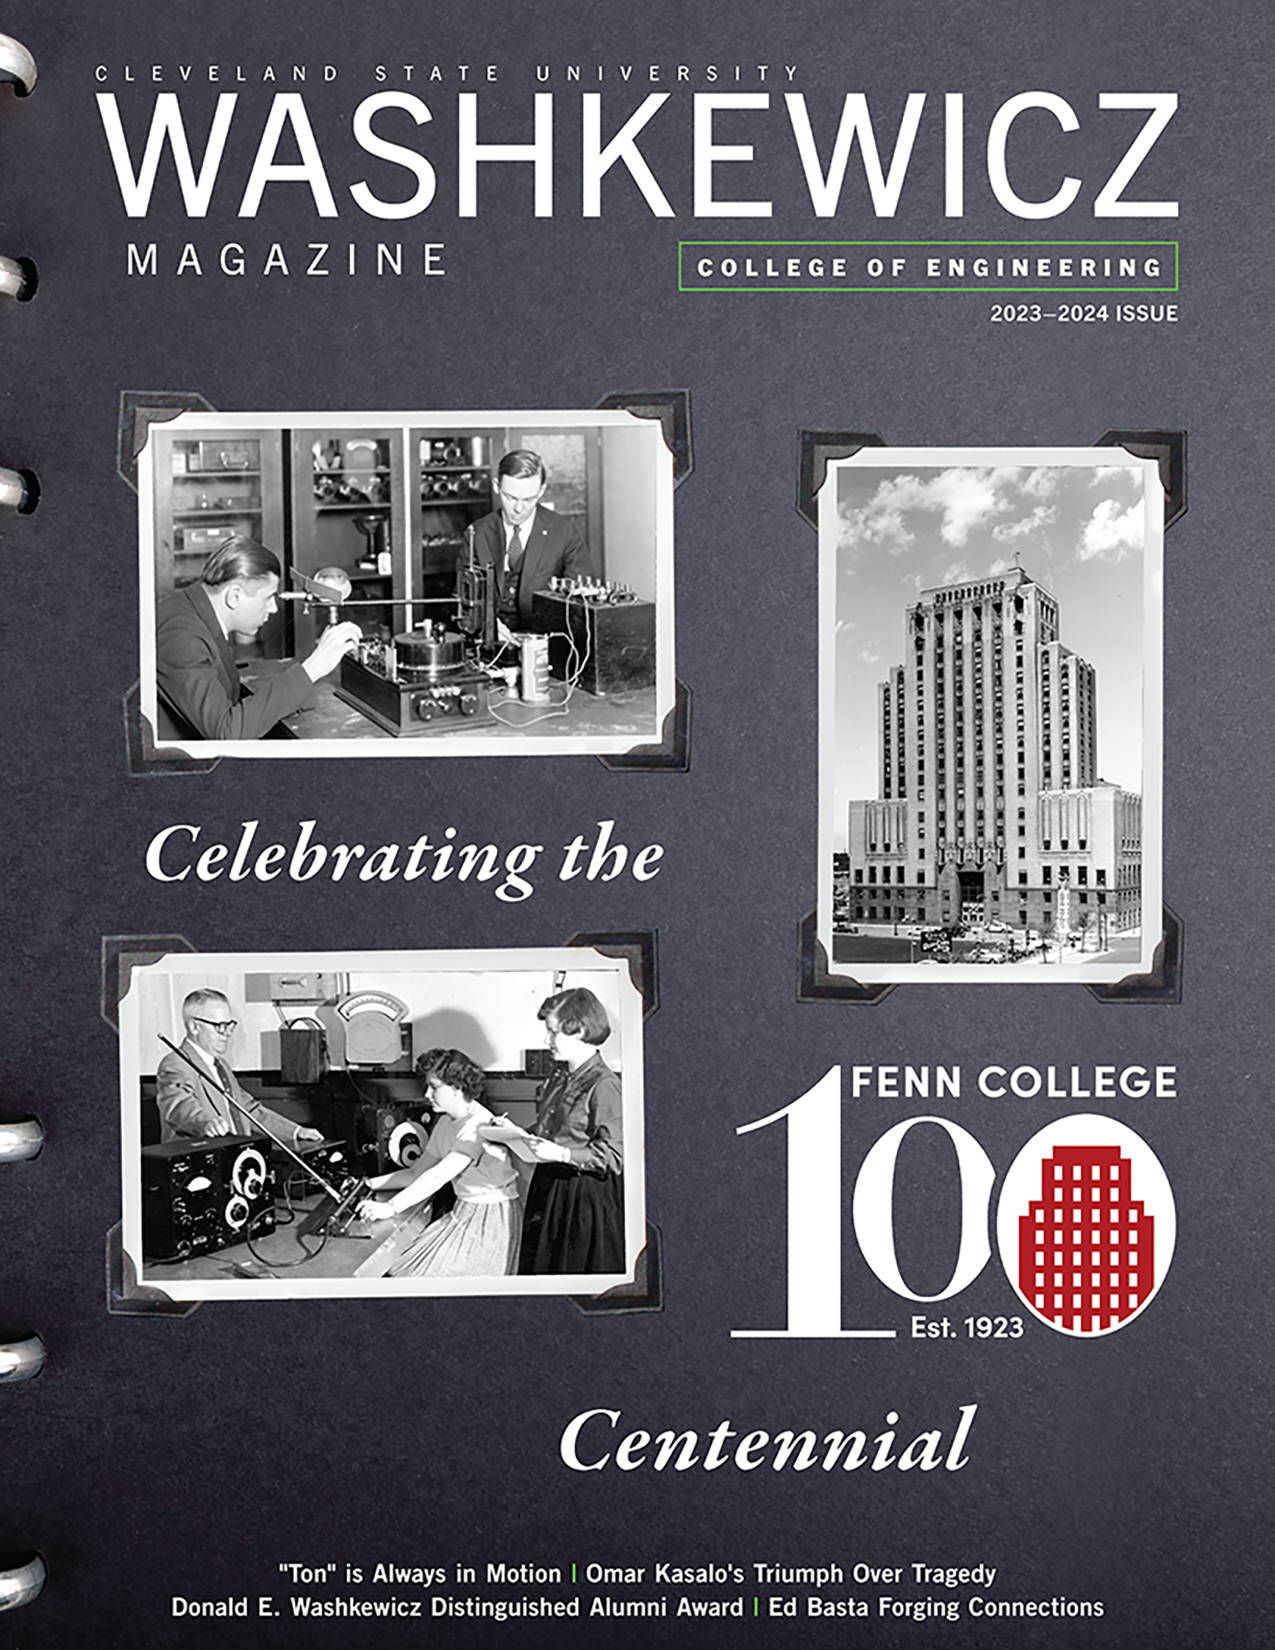 Washkewicz Magazine centennial issue 2023-2024